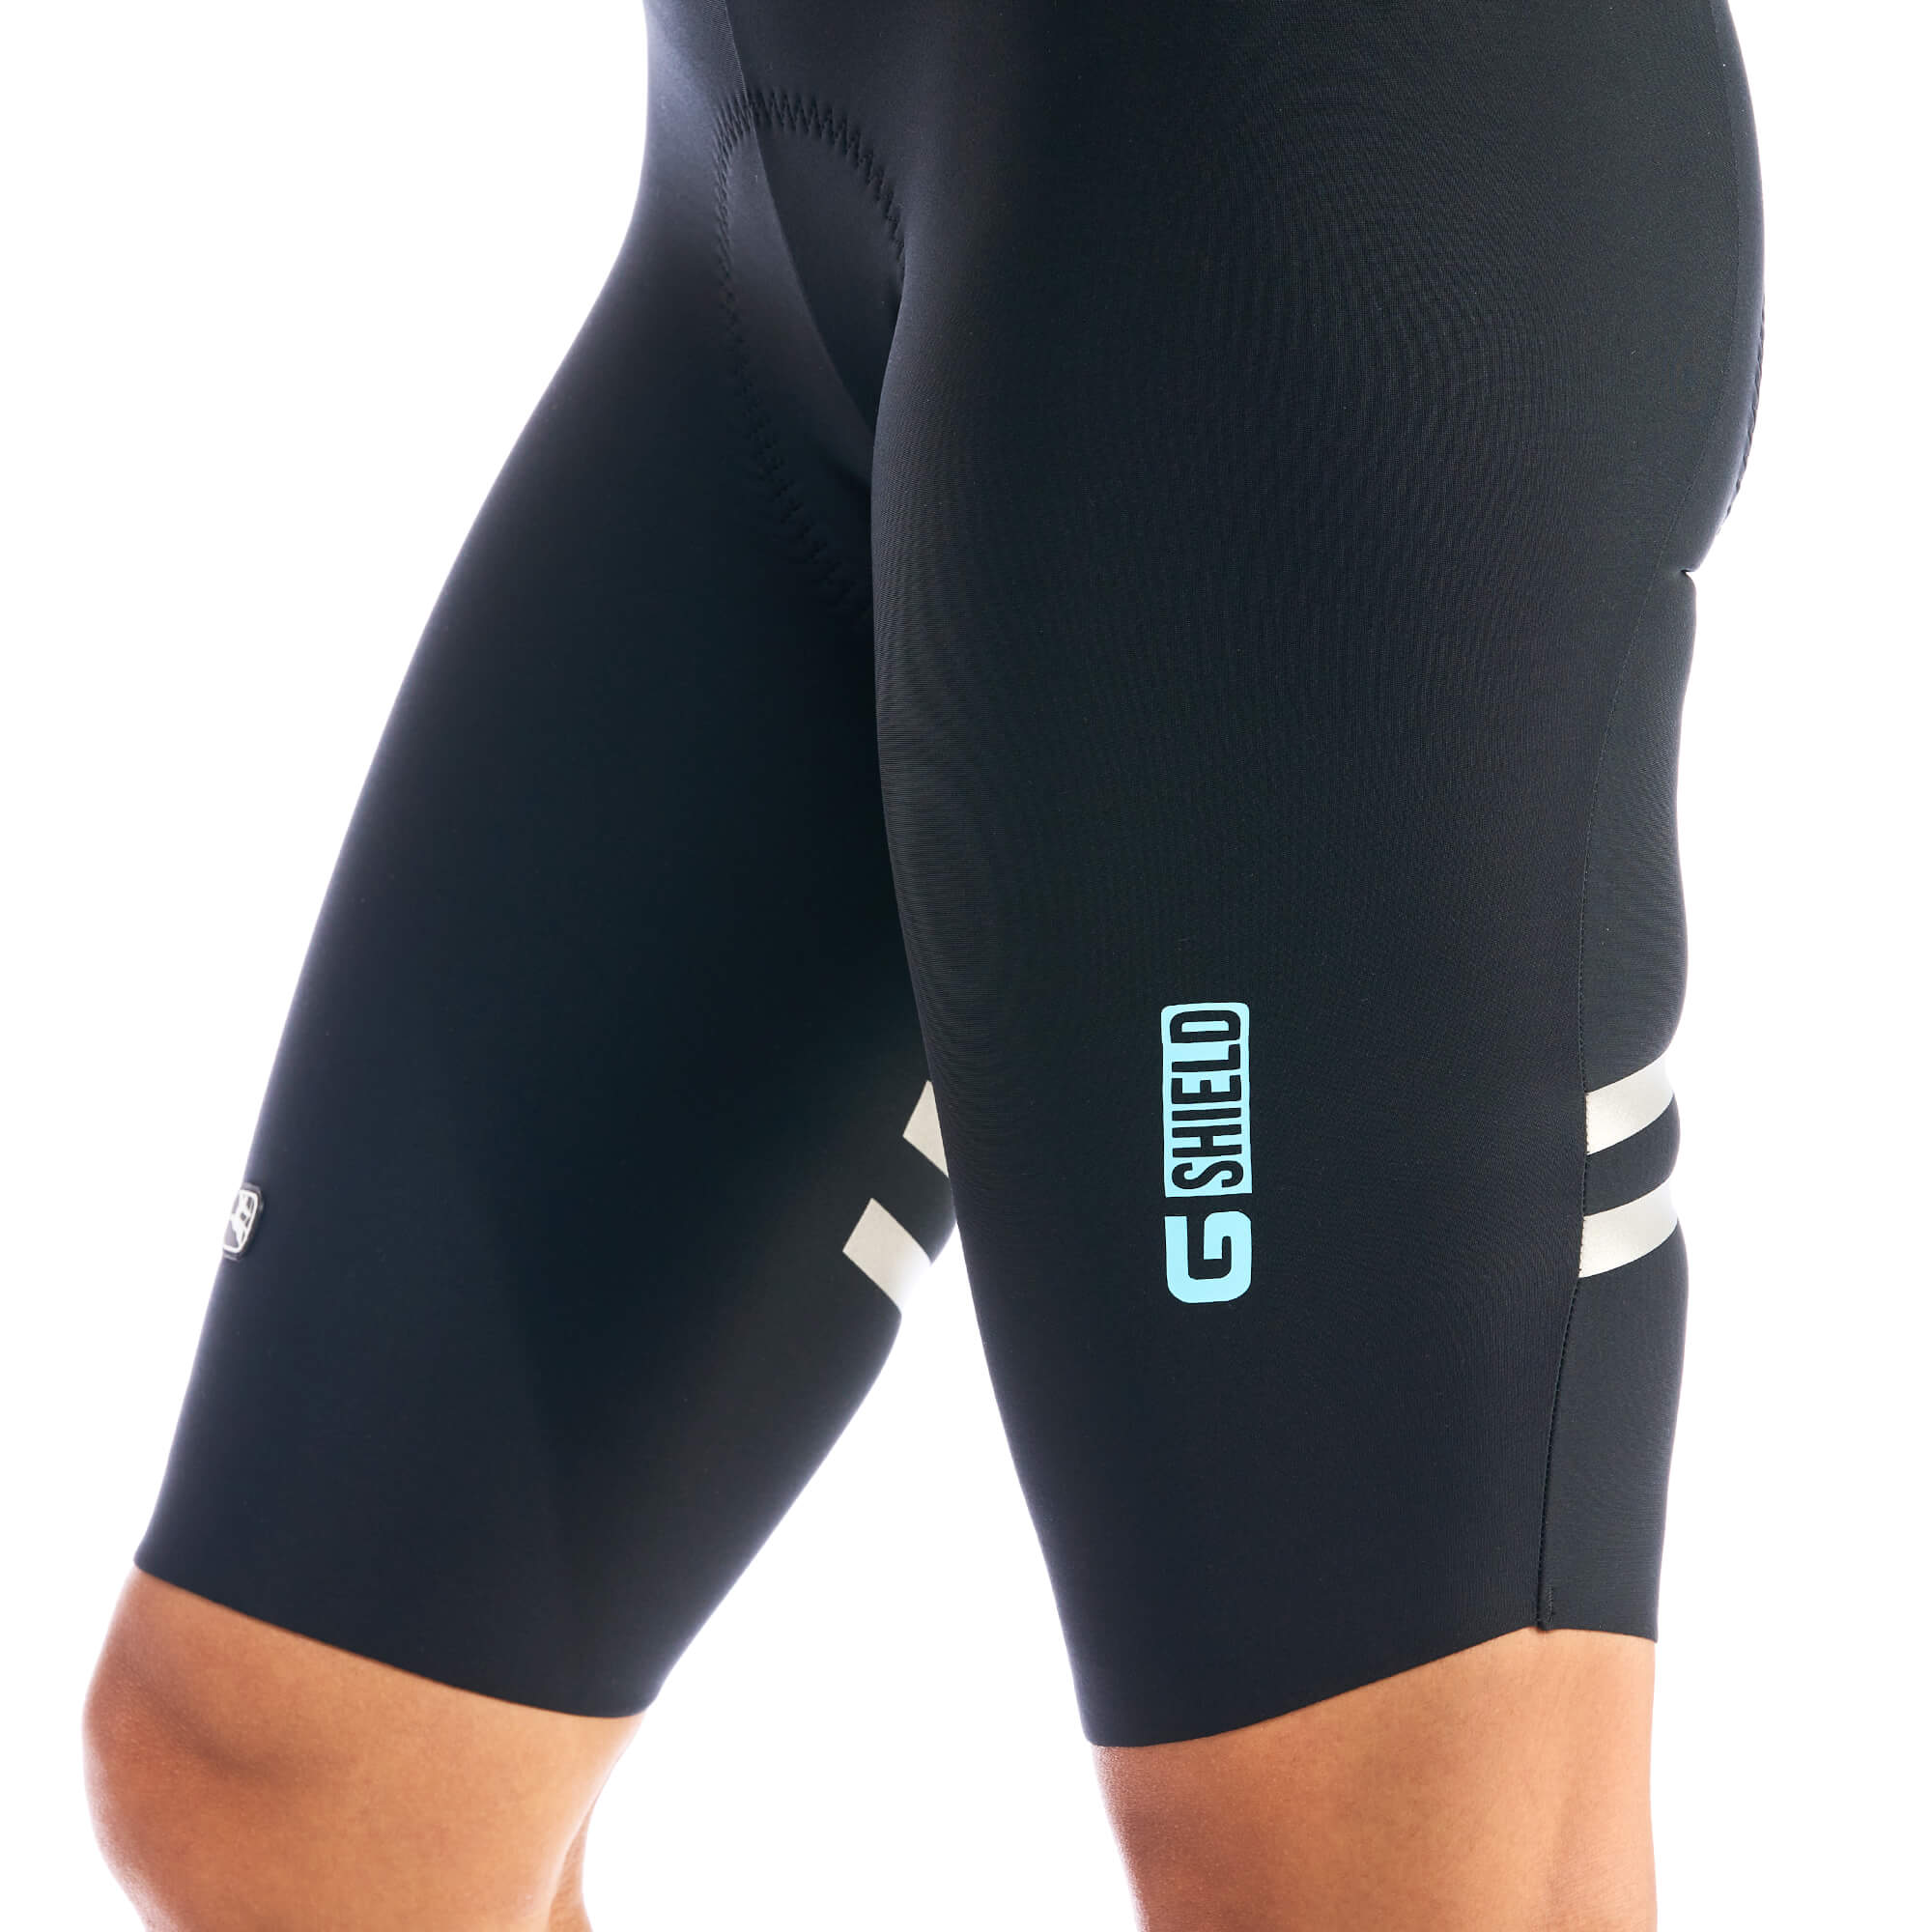 G-Shield Thermal Bib Shorts